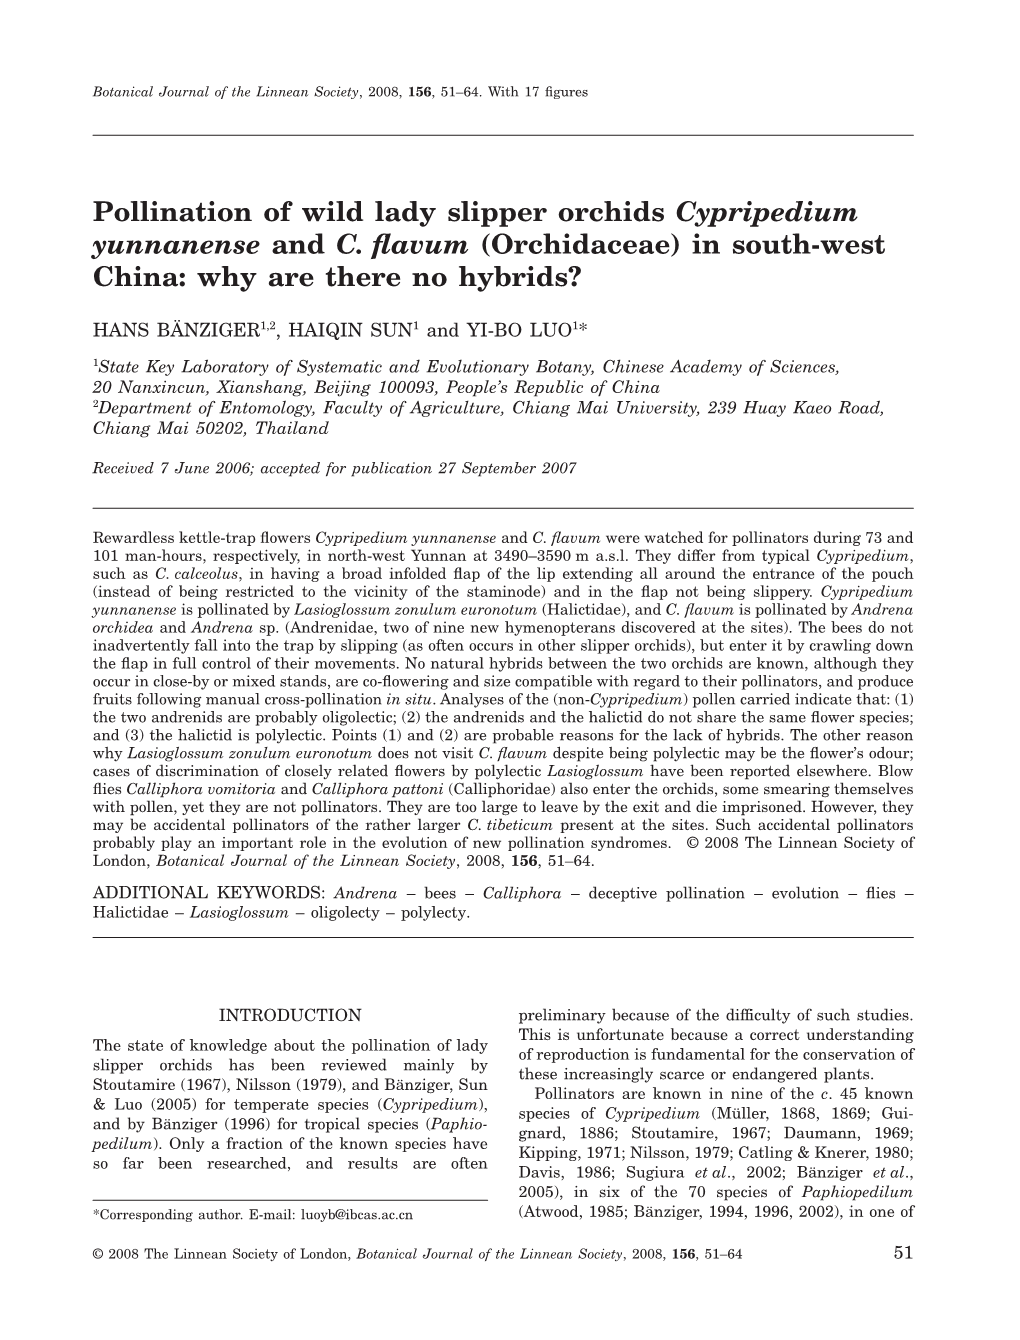 Pollination of Wild Lady Slipper Orchids Cypripedium Yunnanense and C